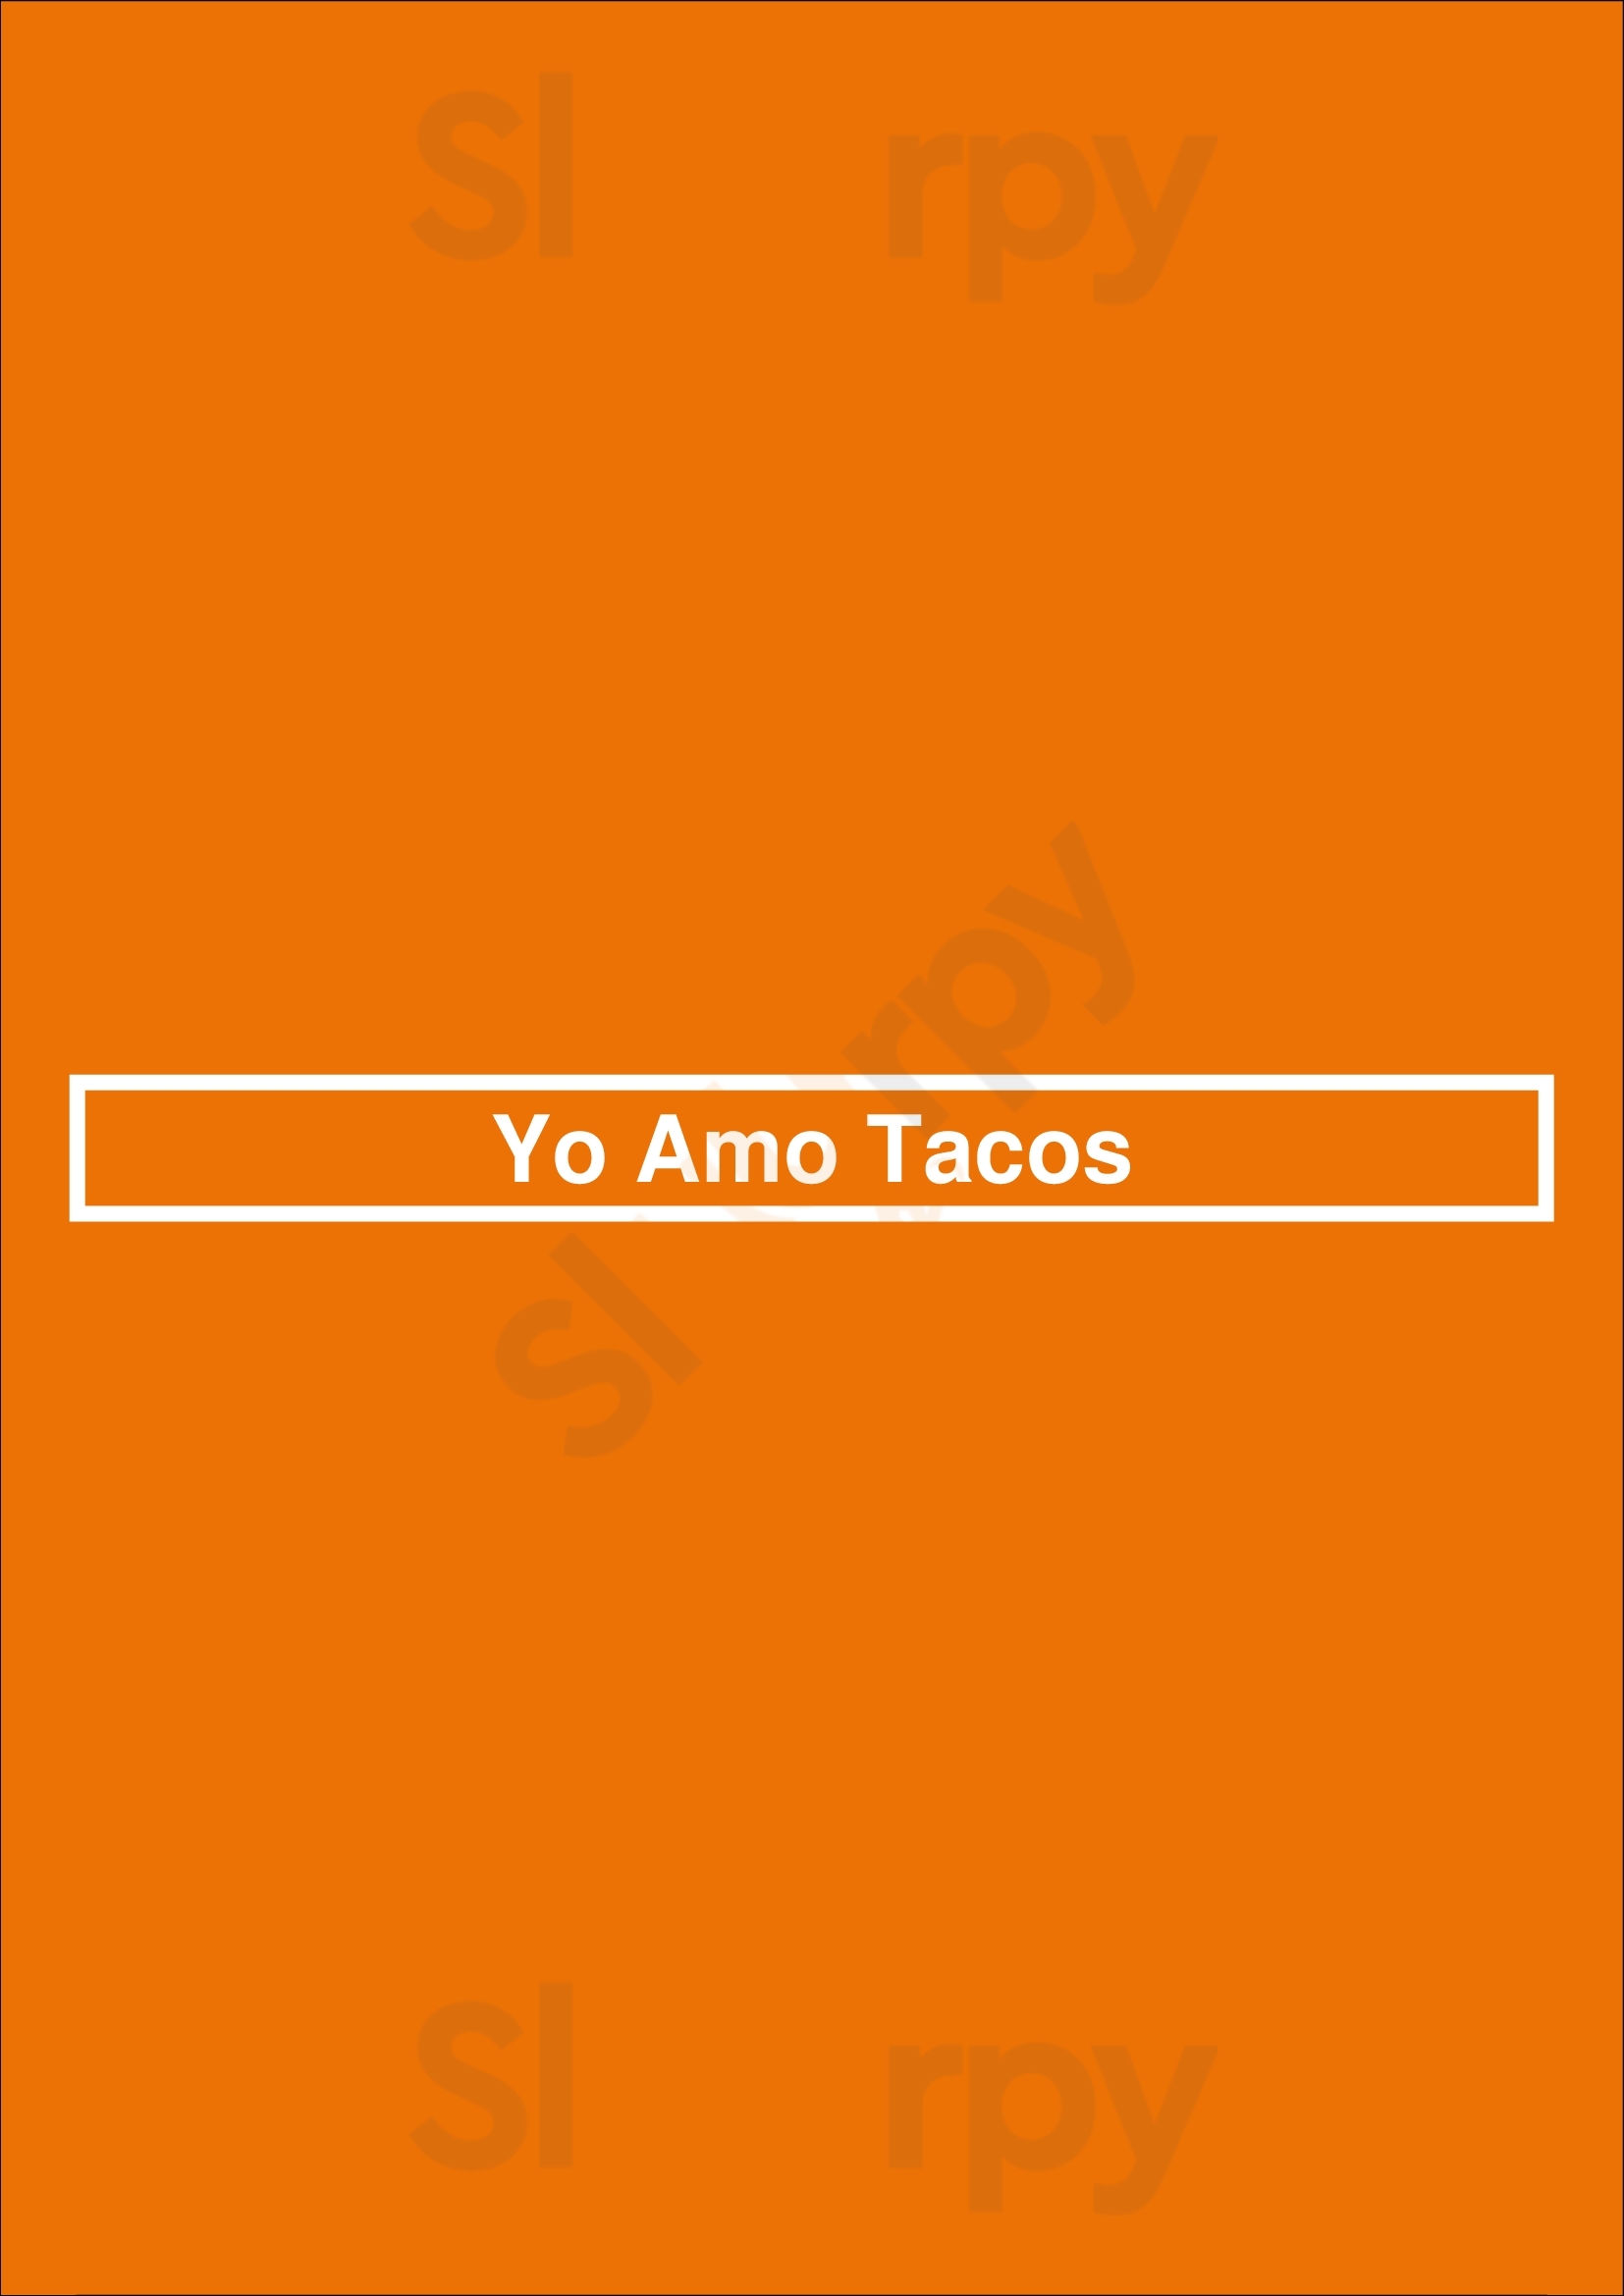 Yo Amo Tacos Woodbridge Menu - 1